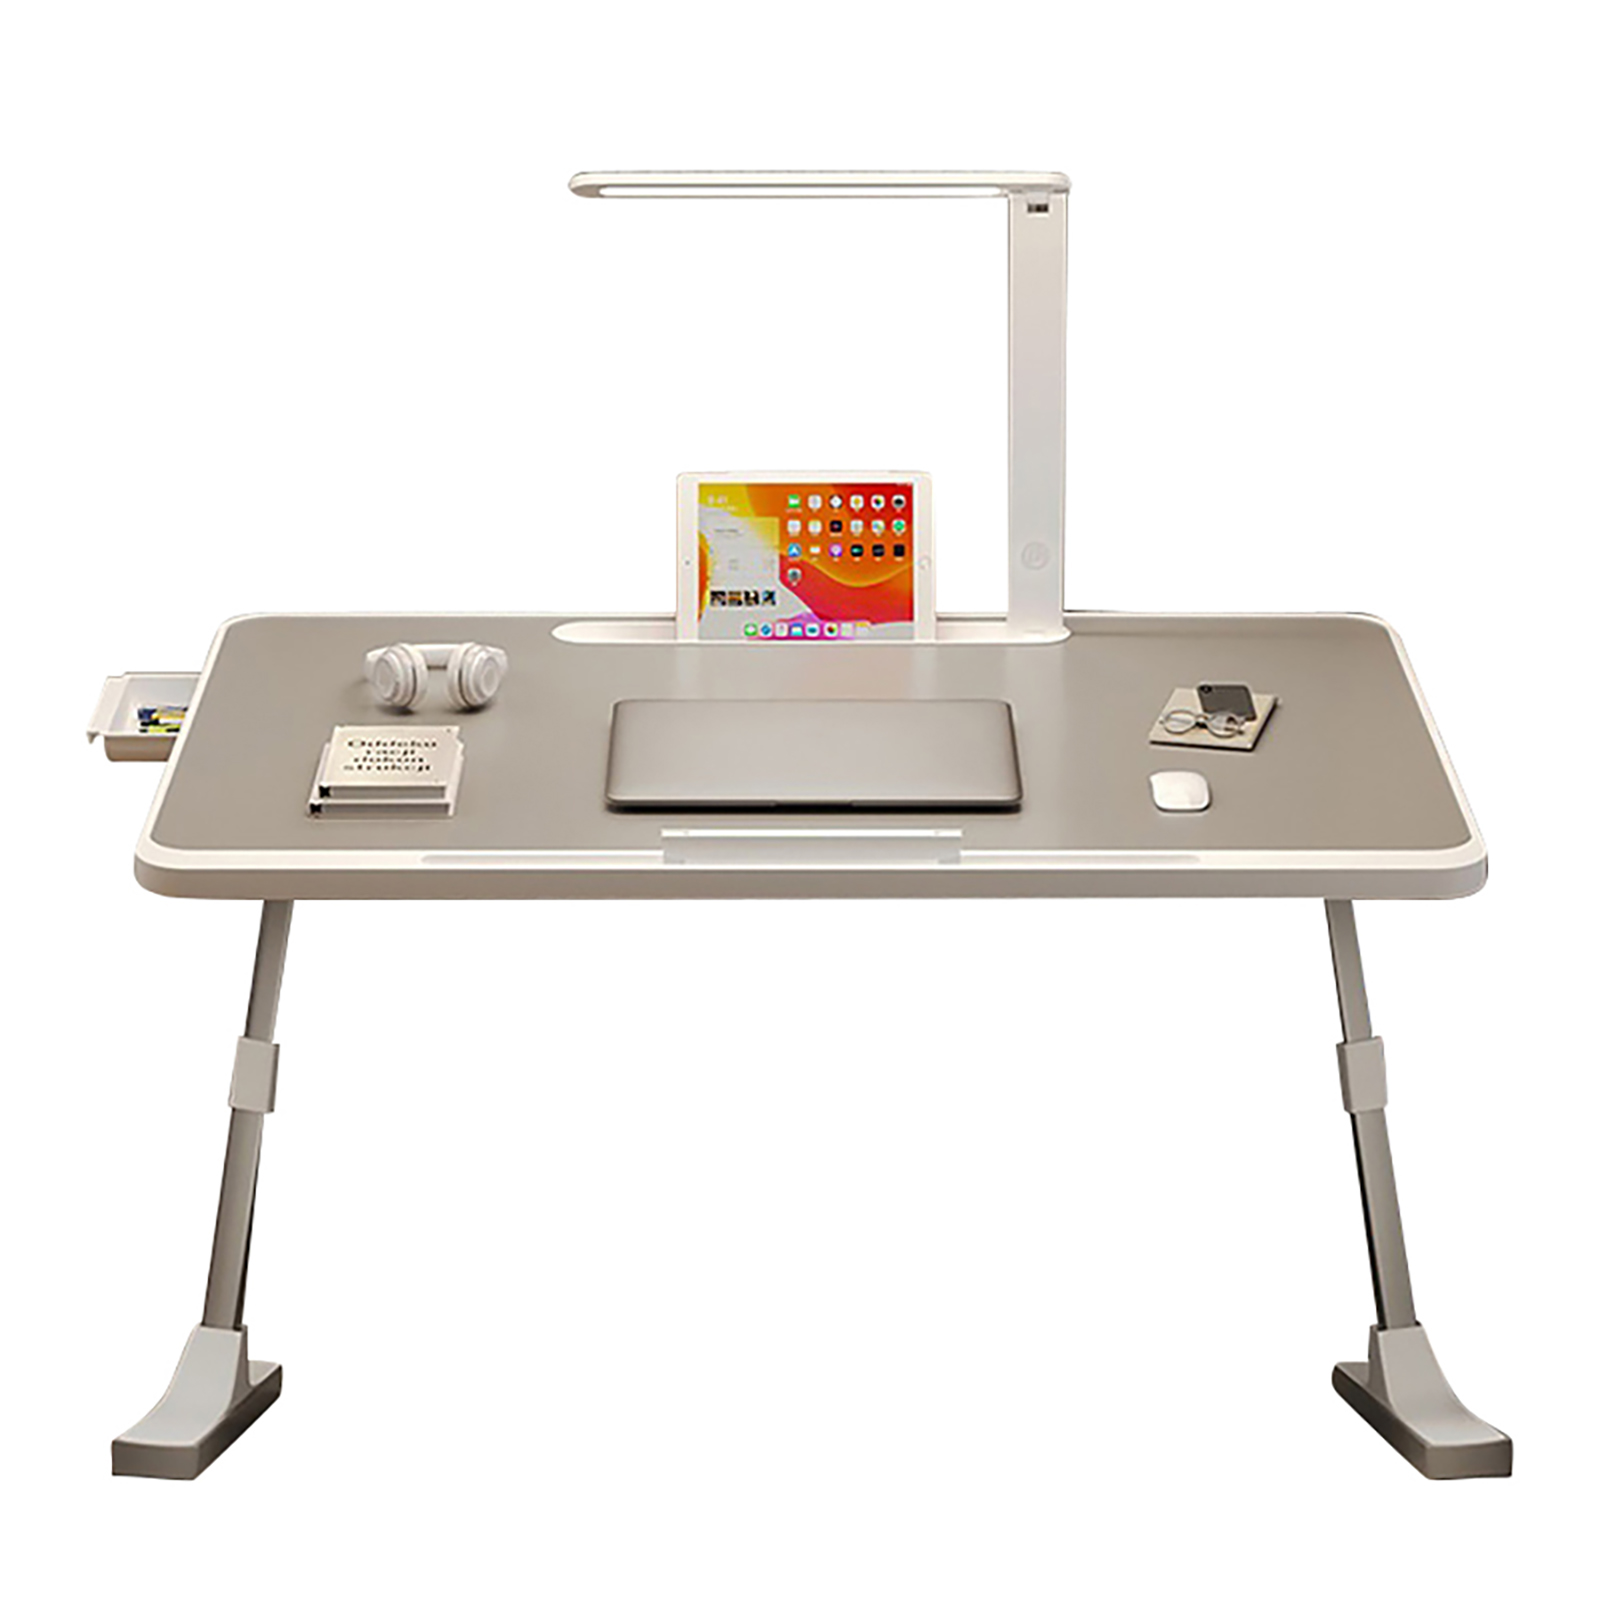 Laptop Desk For Bed With LED Lamp 3 Levels Brightness 5 Adjustable Heights 10.6-15.4Inch Foldable Multifunctional Bed Desk